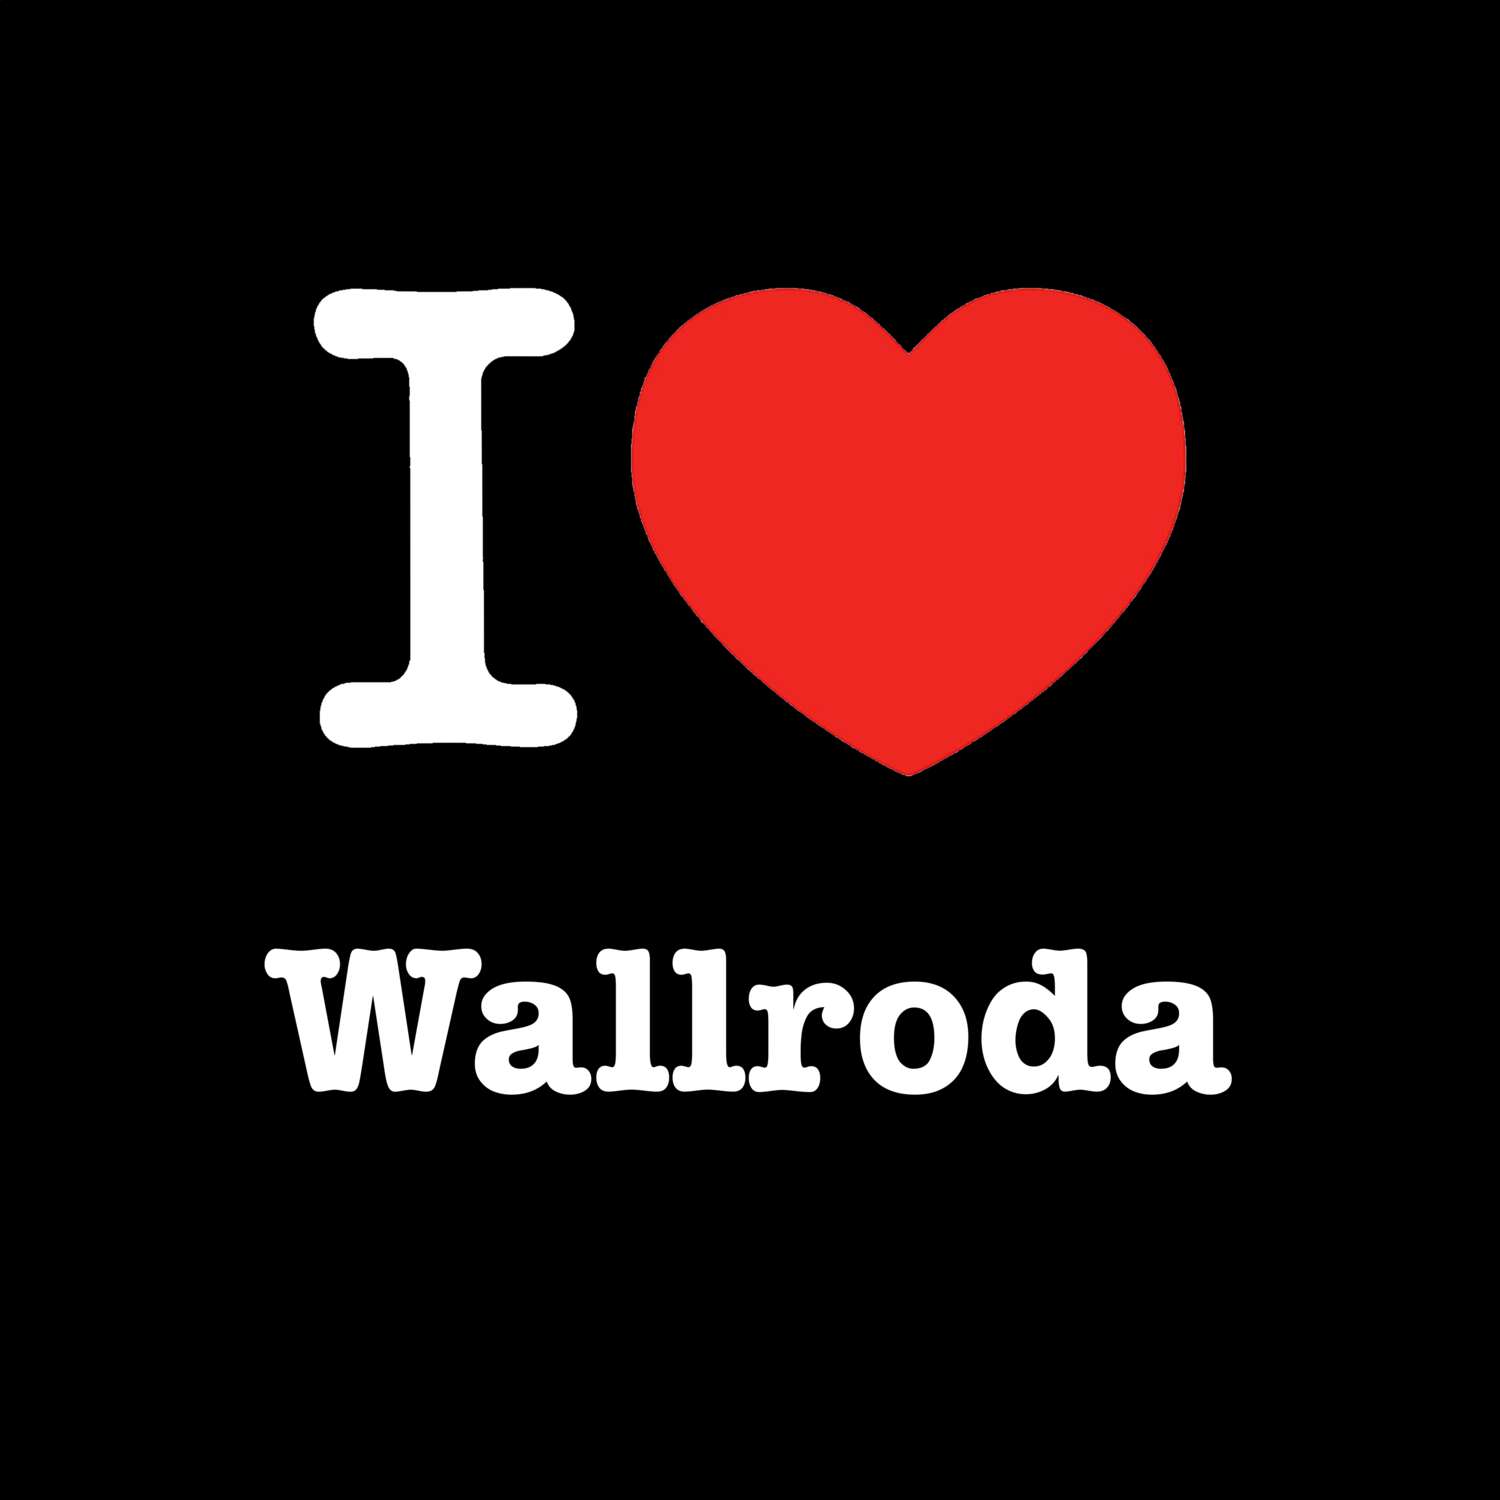 Wallroda T-Shirt »I love«